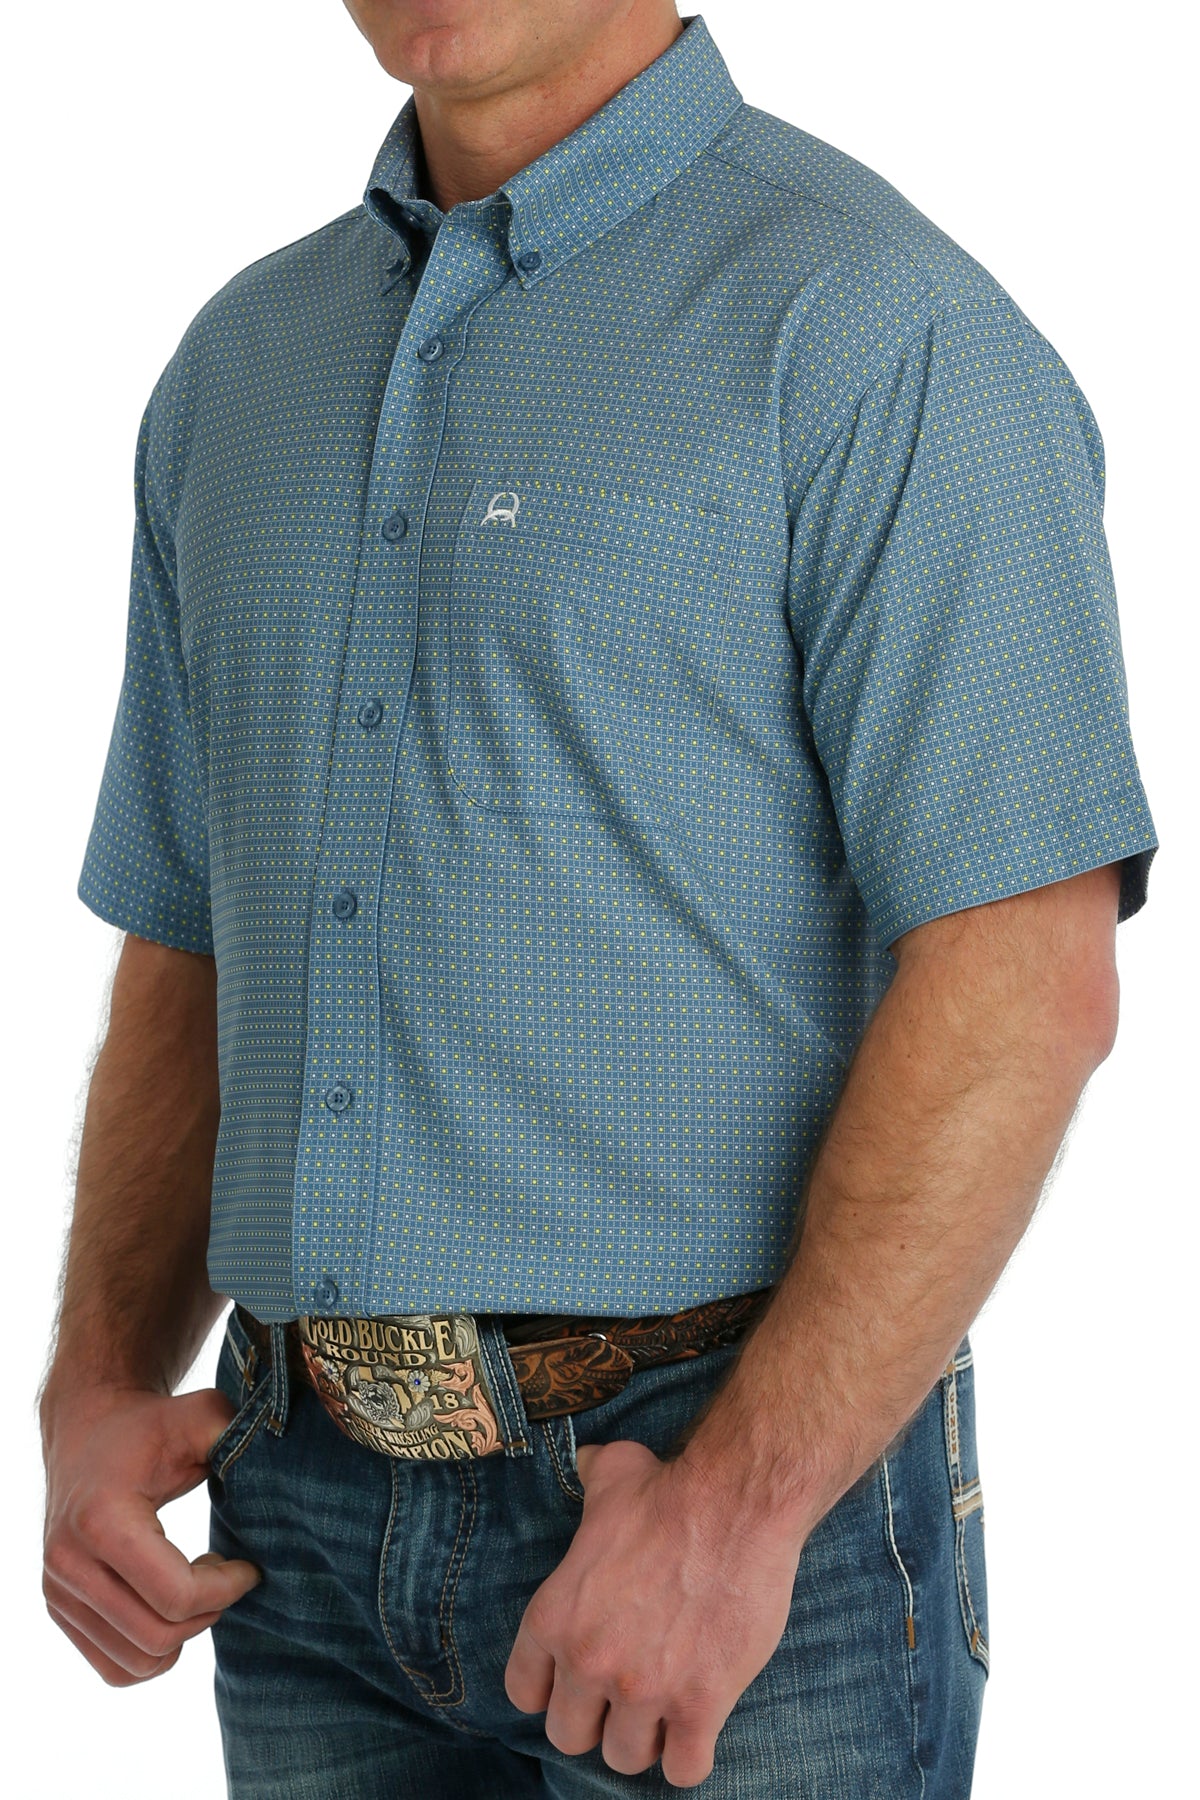 Cinch Men's ARENAFLEX Short Sleeve Button Down Shirt - Blue Geometric Print